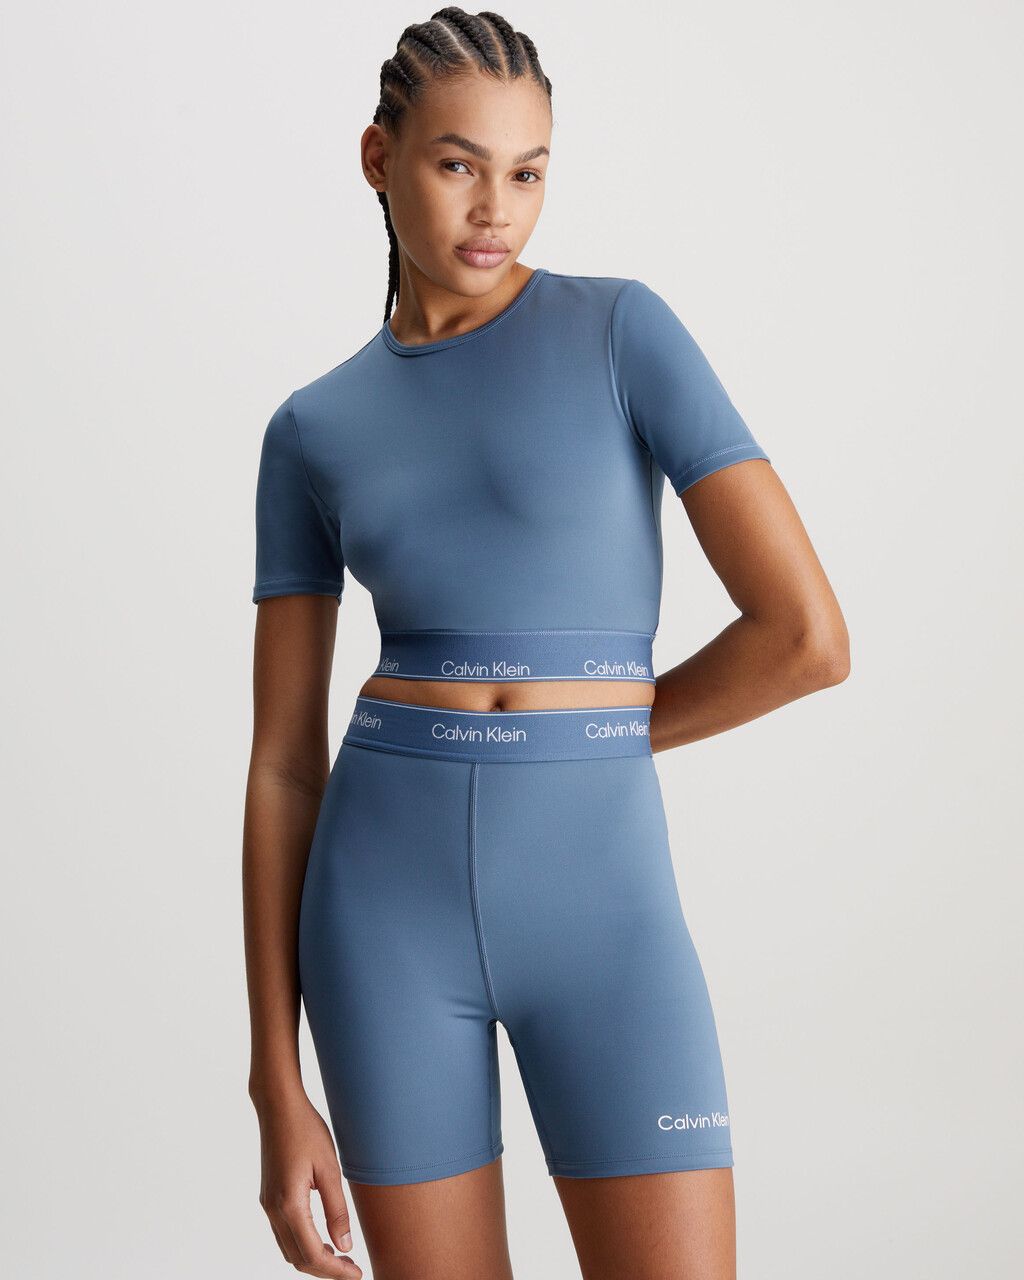 Calvin Klein - Áo tay ngắn thể thao nữ Cropped Gym T-Shirt